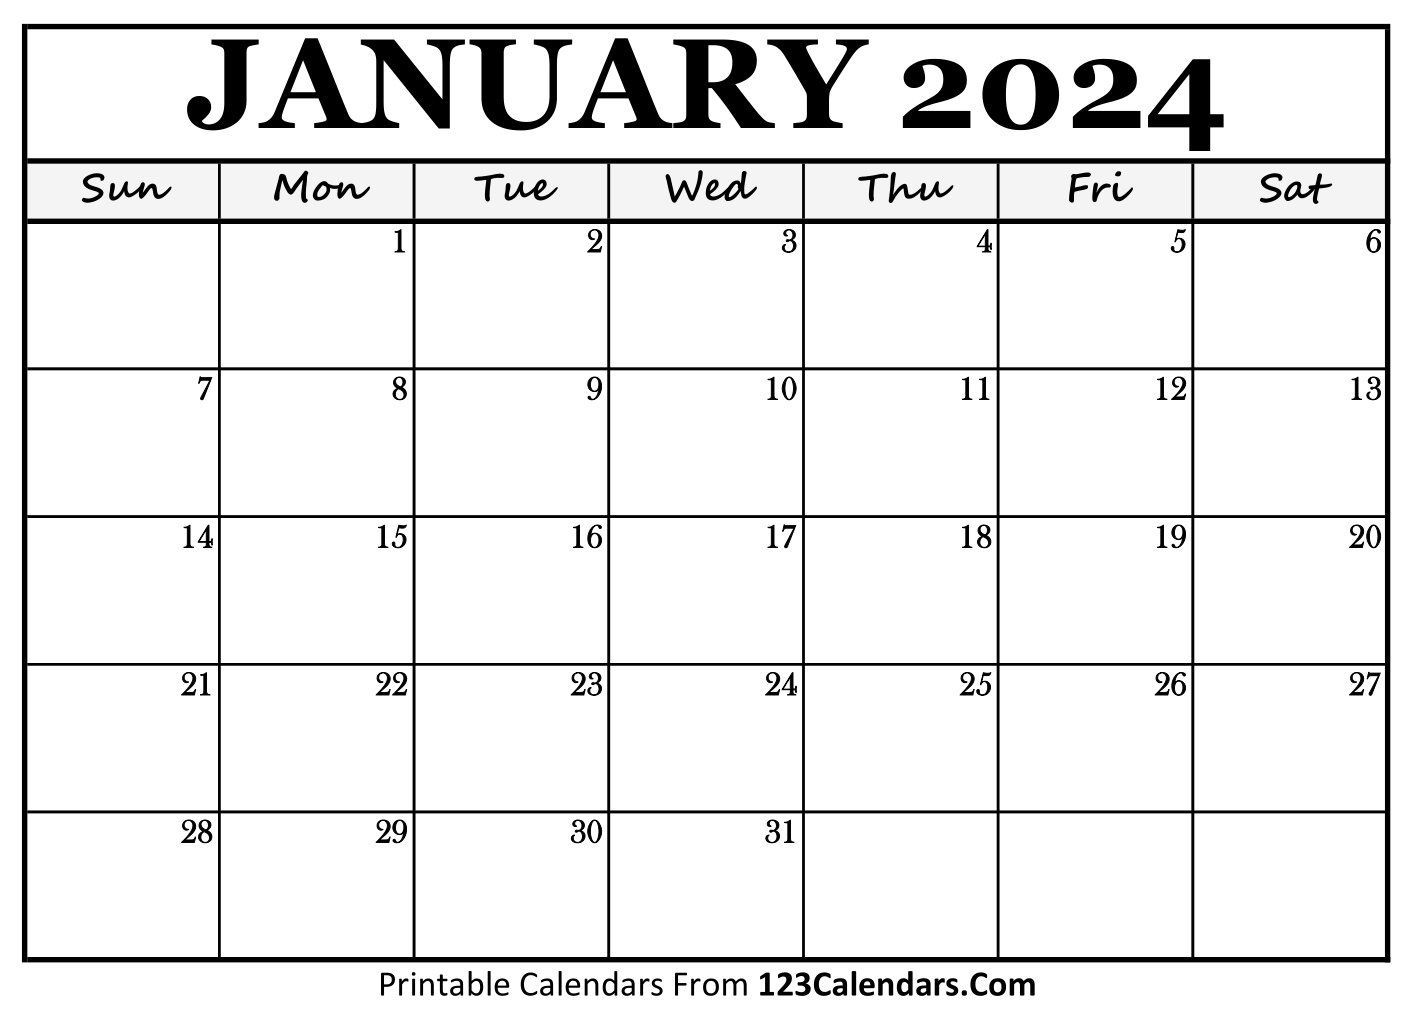 Printable January 2024 Calendar Templates - 123Calendars | Free Printable Calendar January 2024 Pdf